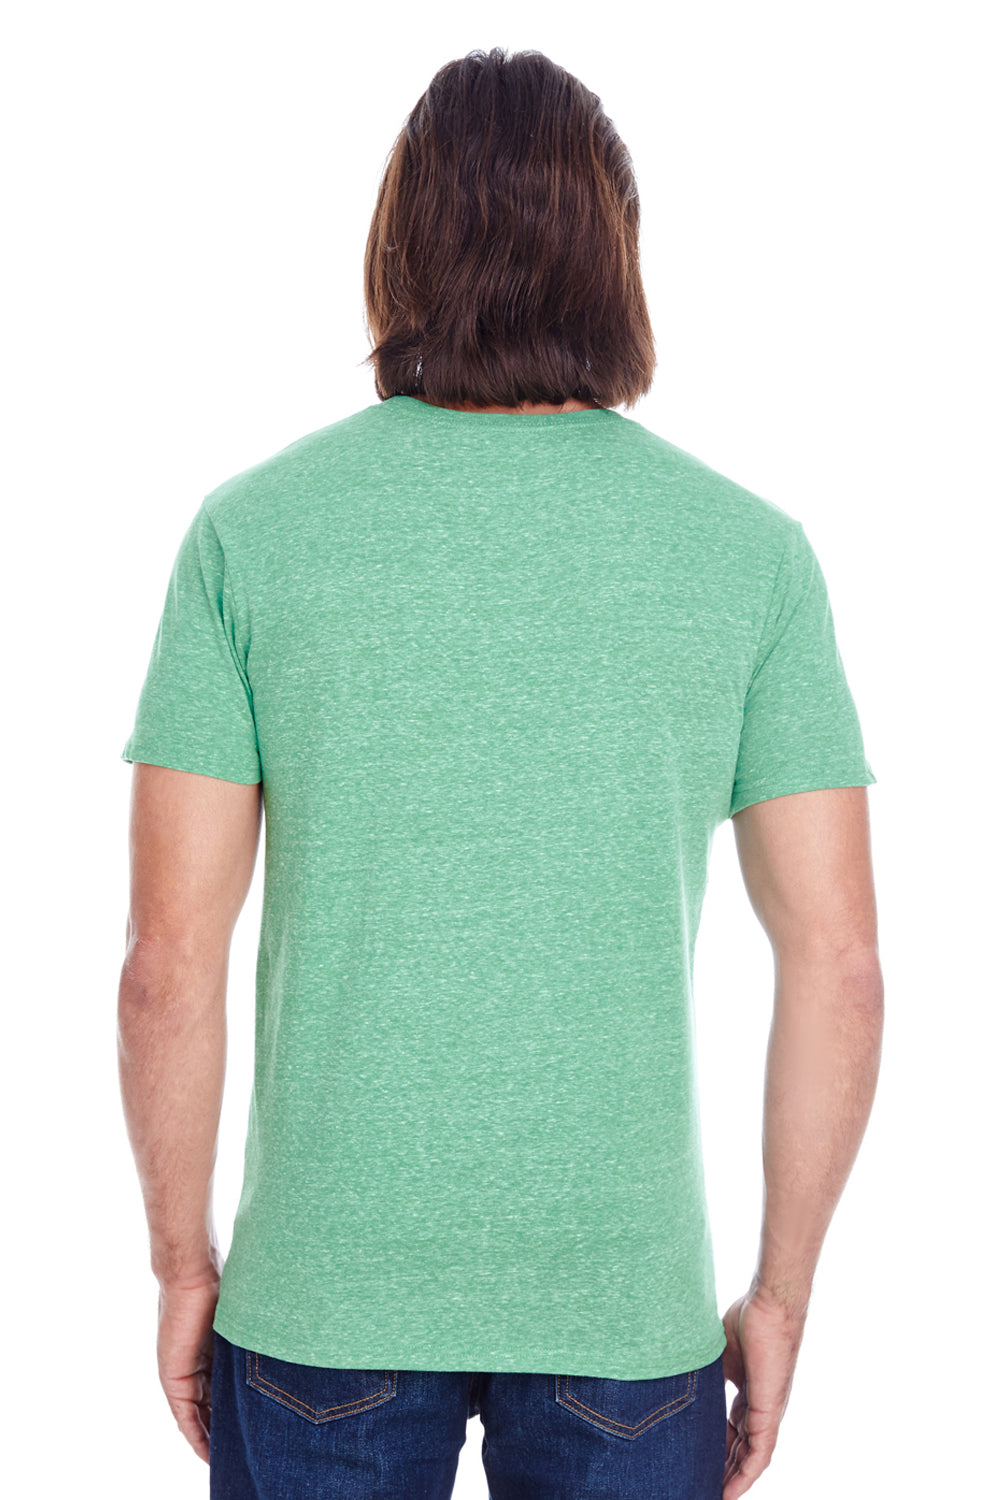 Threadfast Apparel 102A Mens Short Sleeve Crewneck T-Shirt Green Back